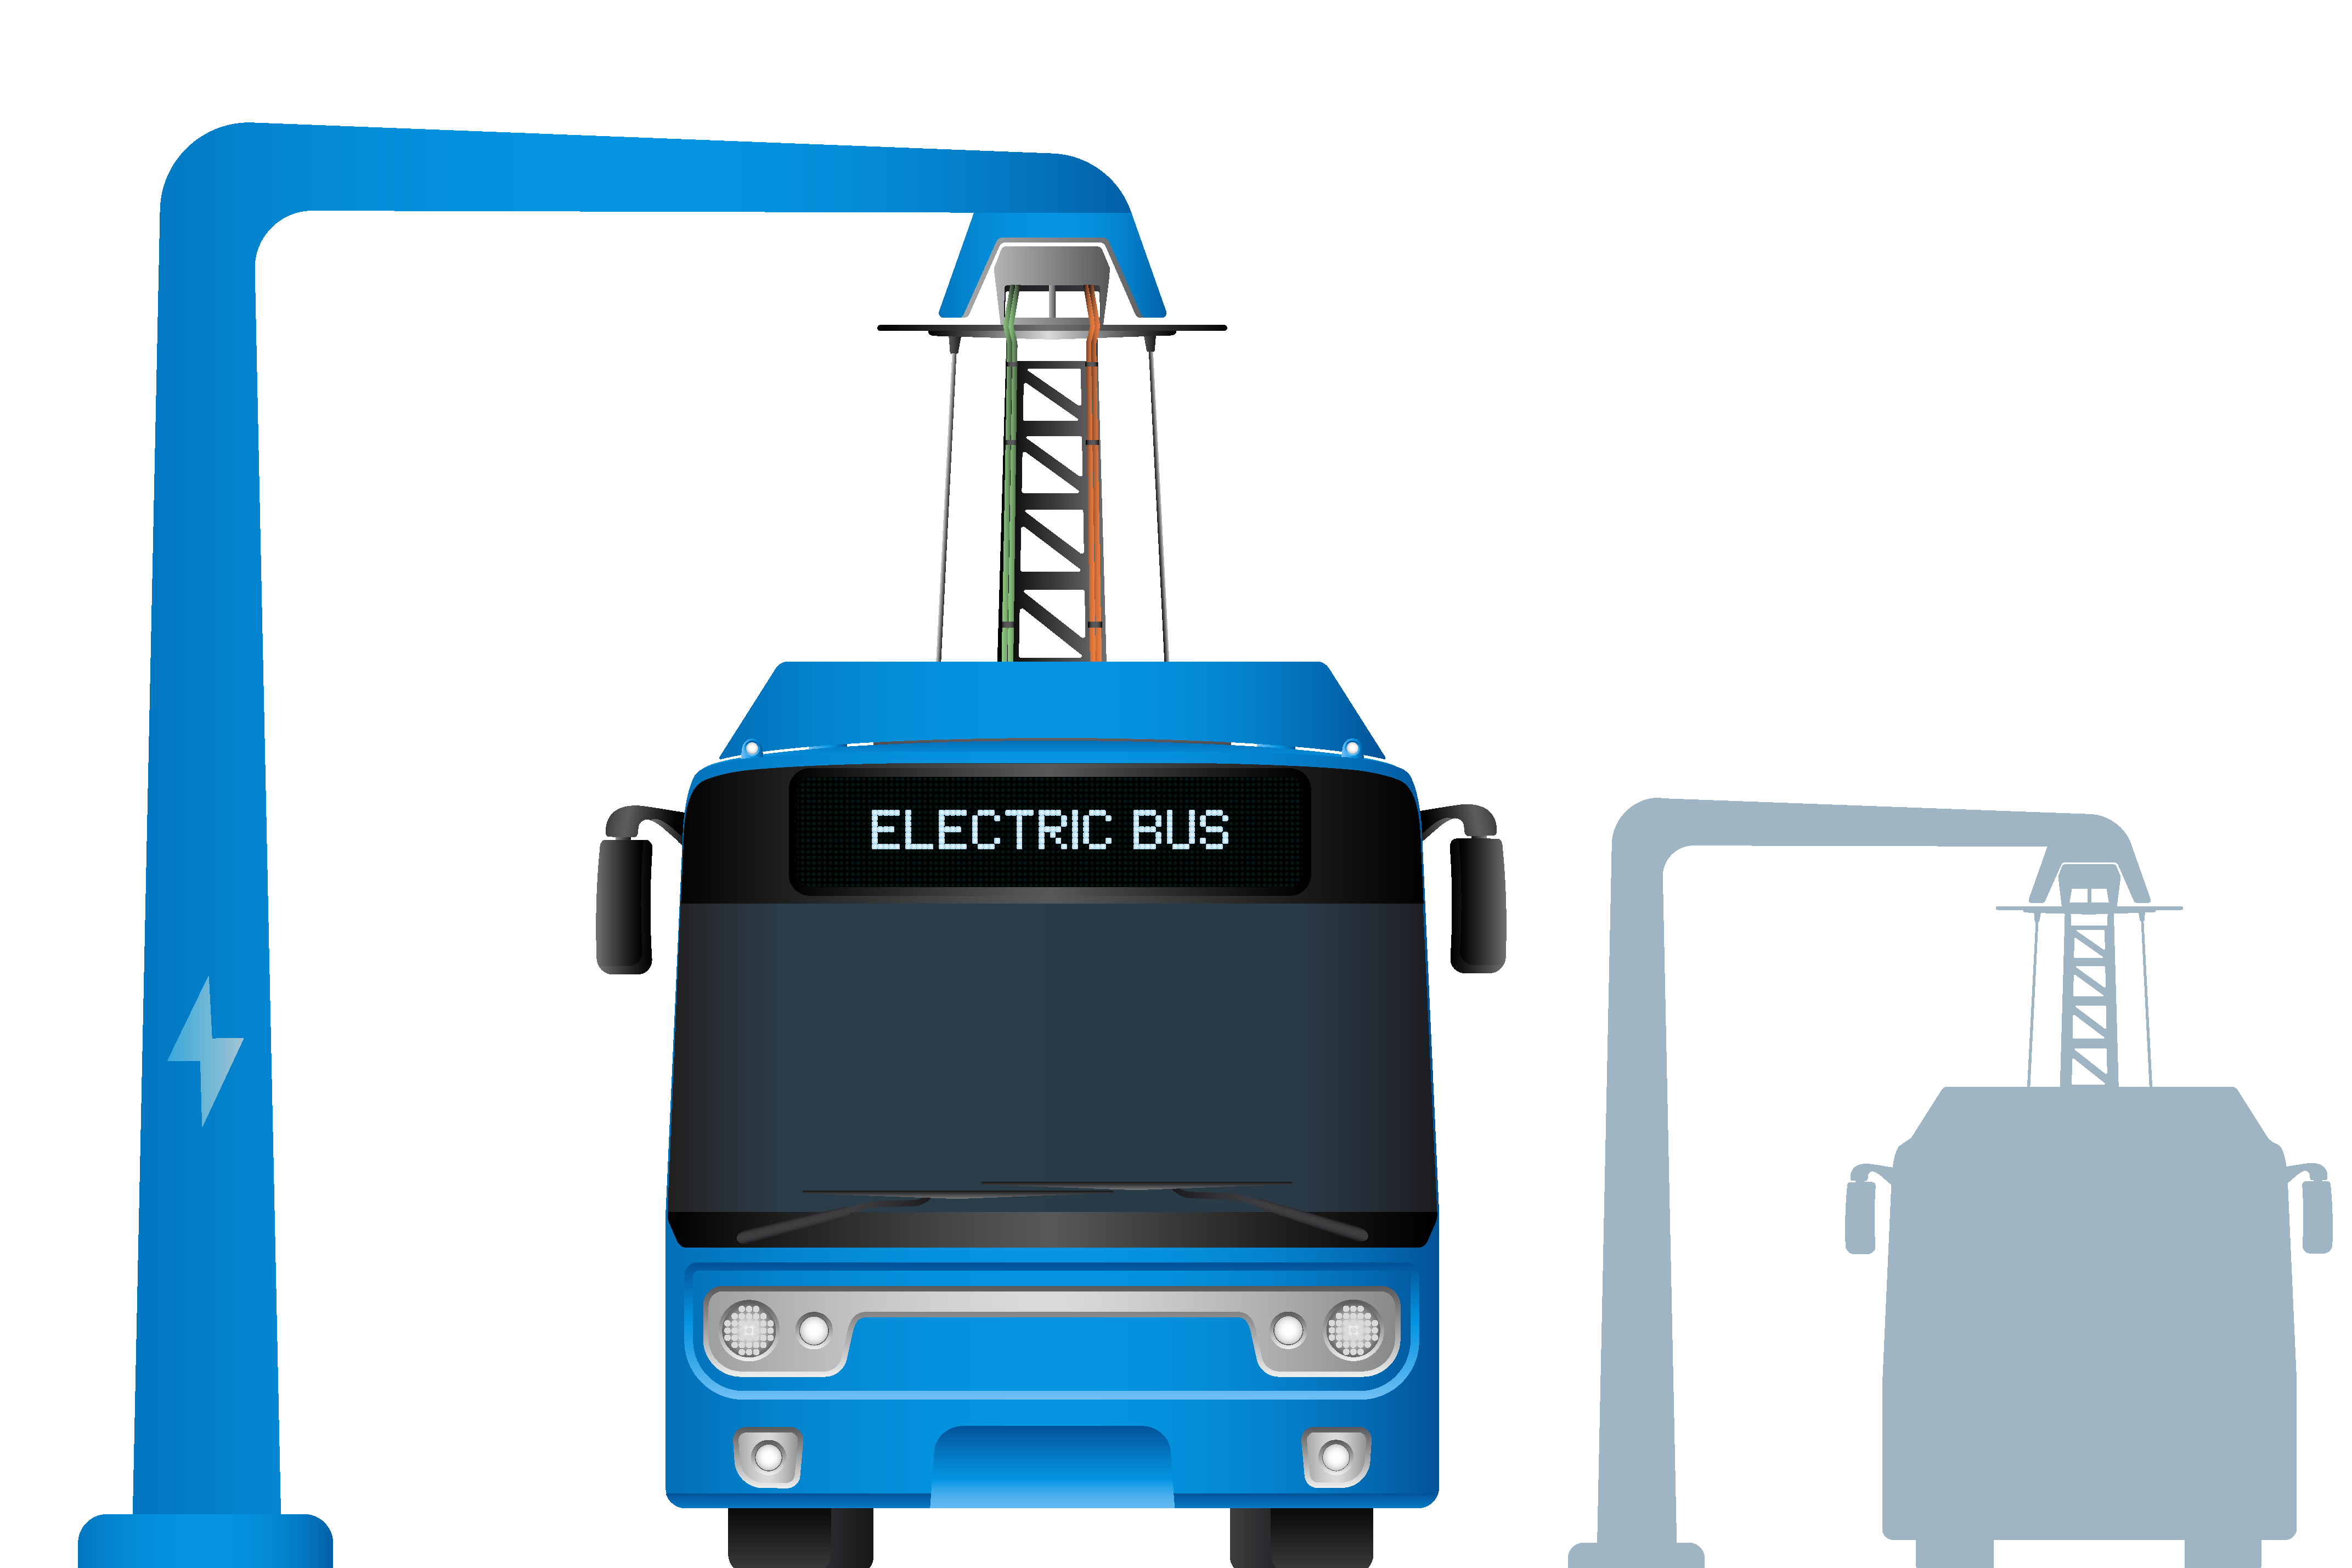 Electric bus graphics